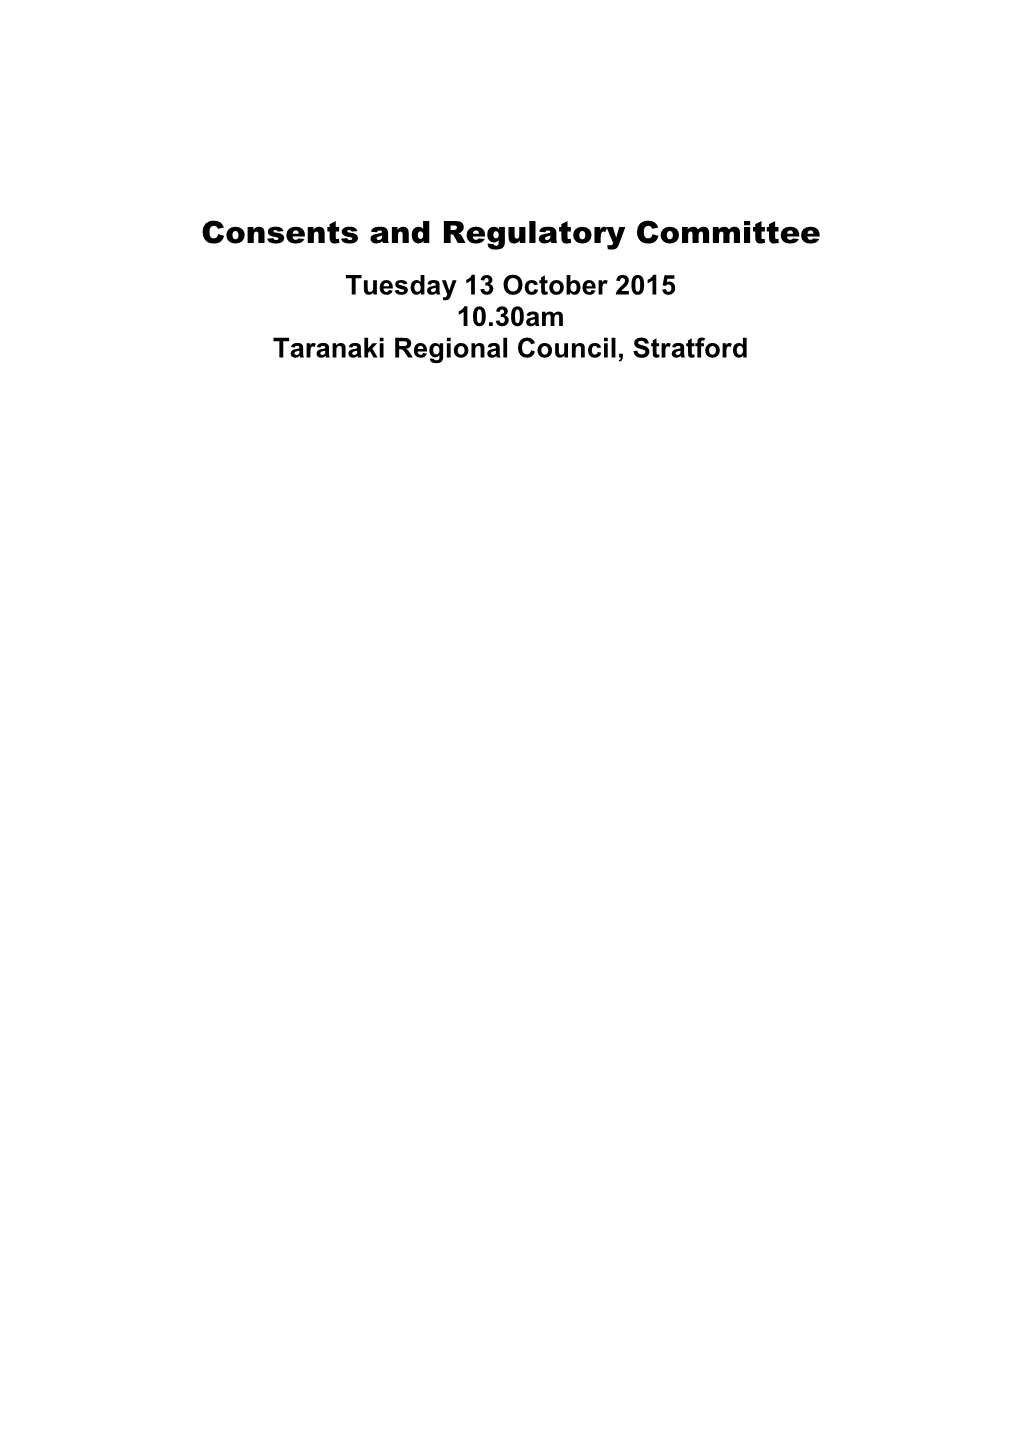 Consents and Regulatory Committee Agenda October 2015